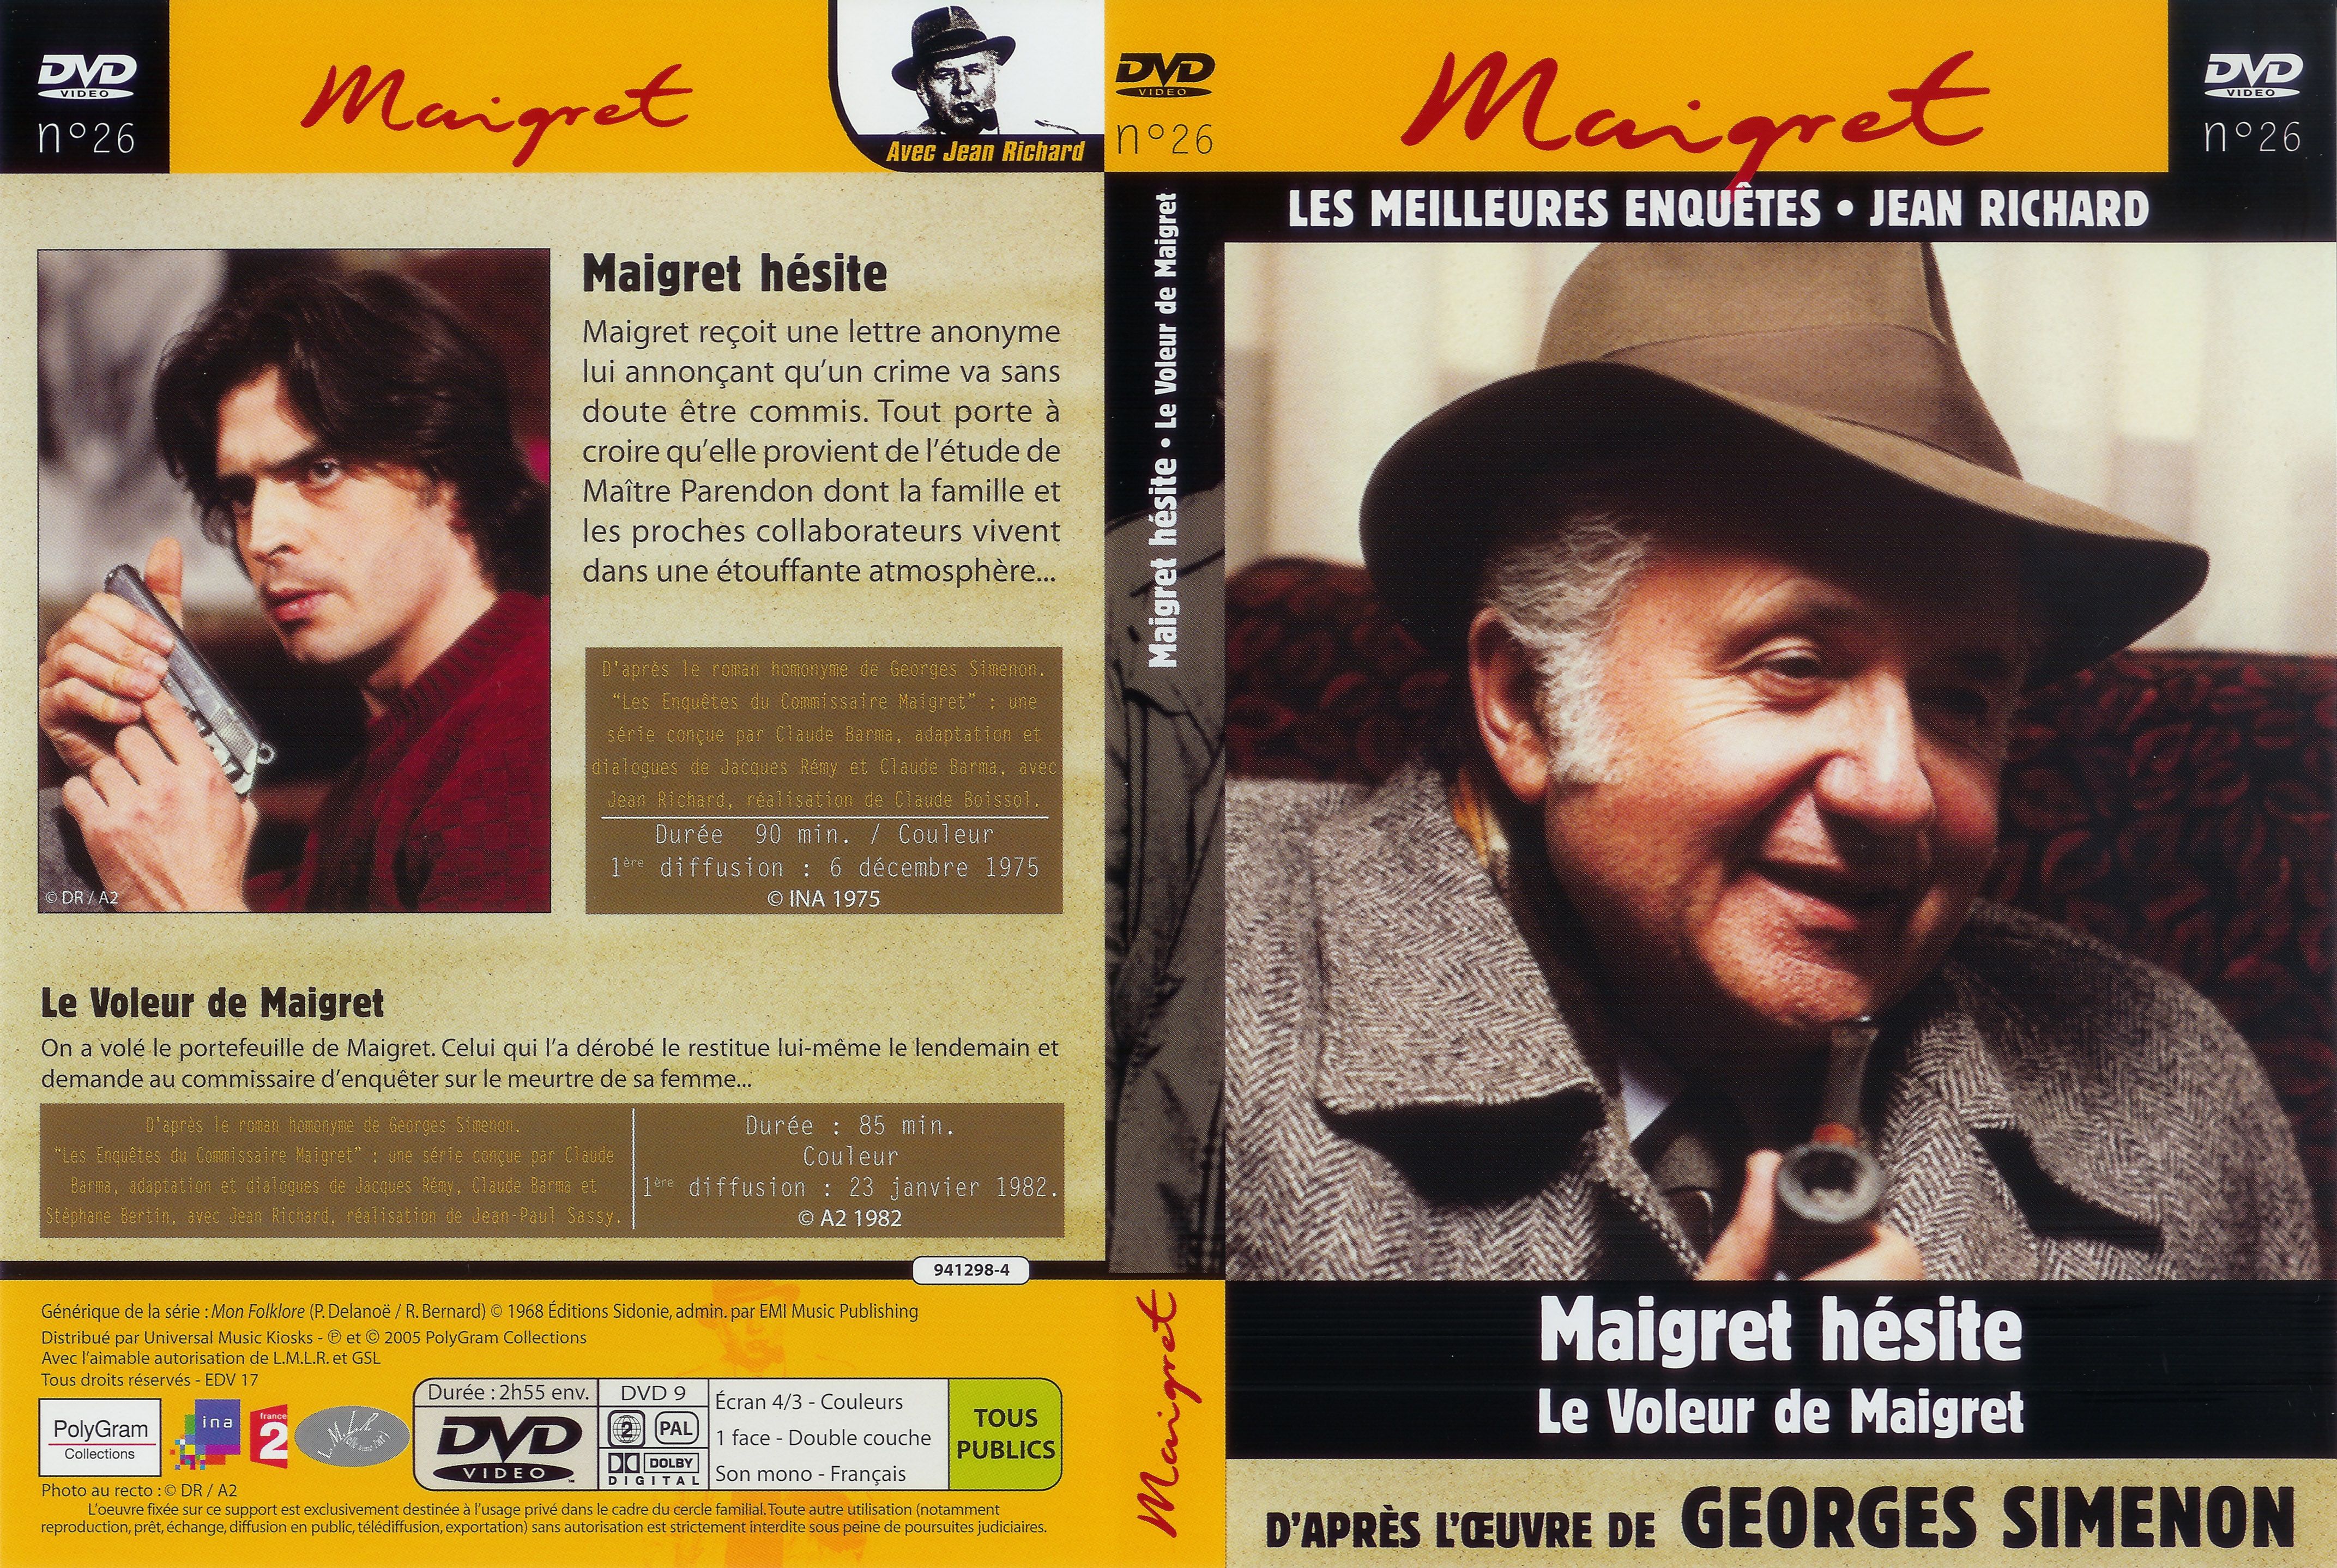 Jaquette DVD Maigret (Jean Richard) vol 26